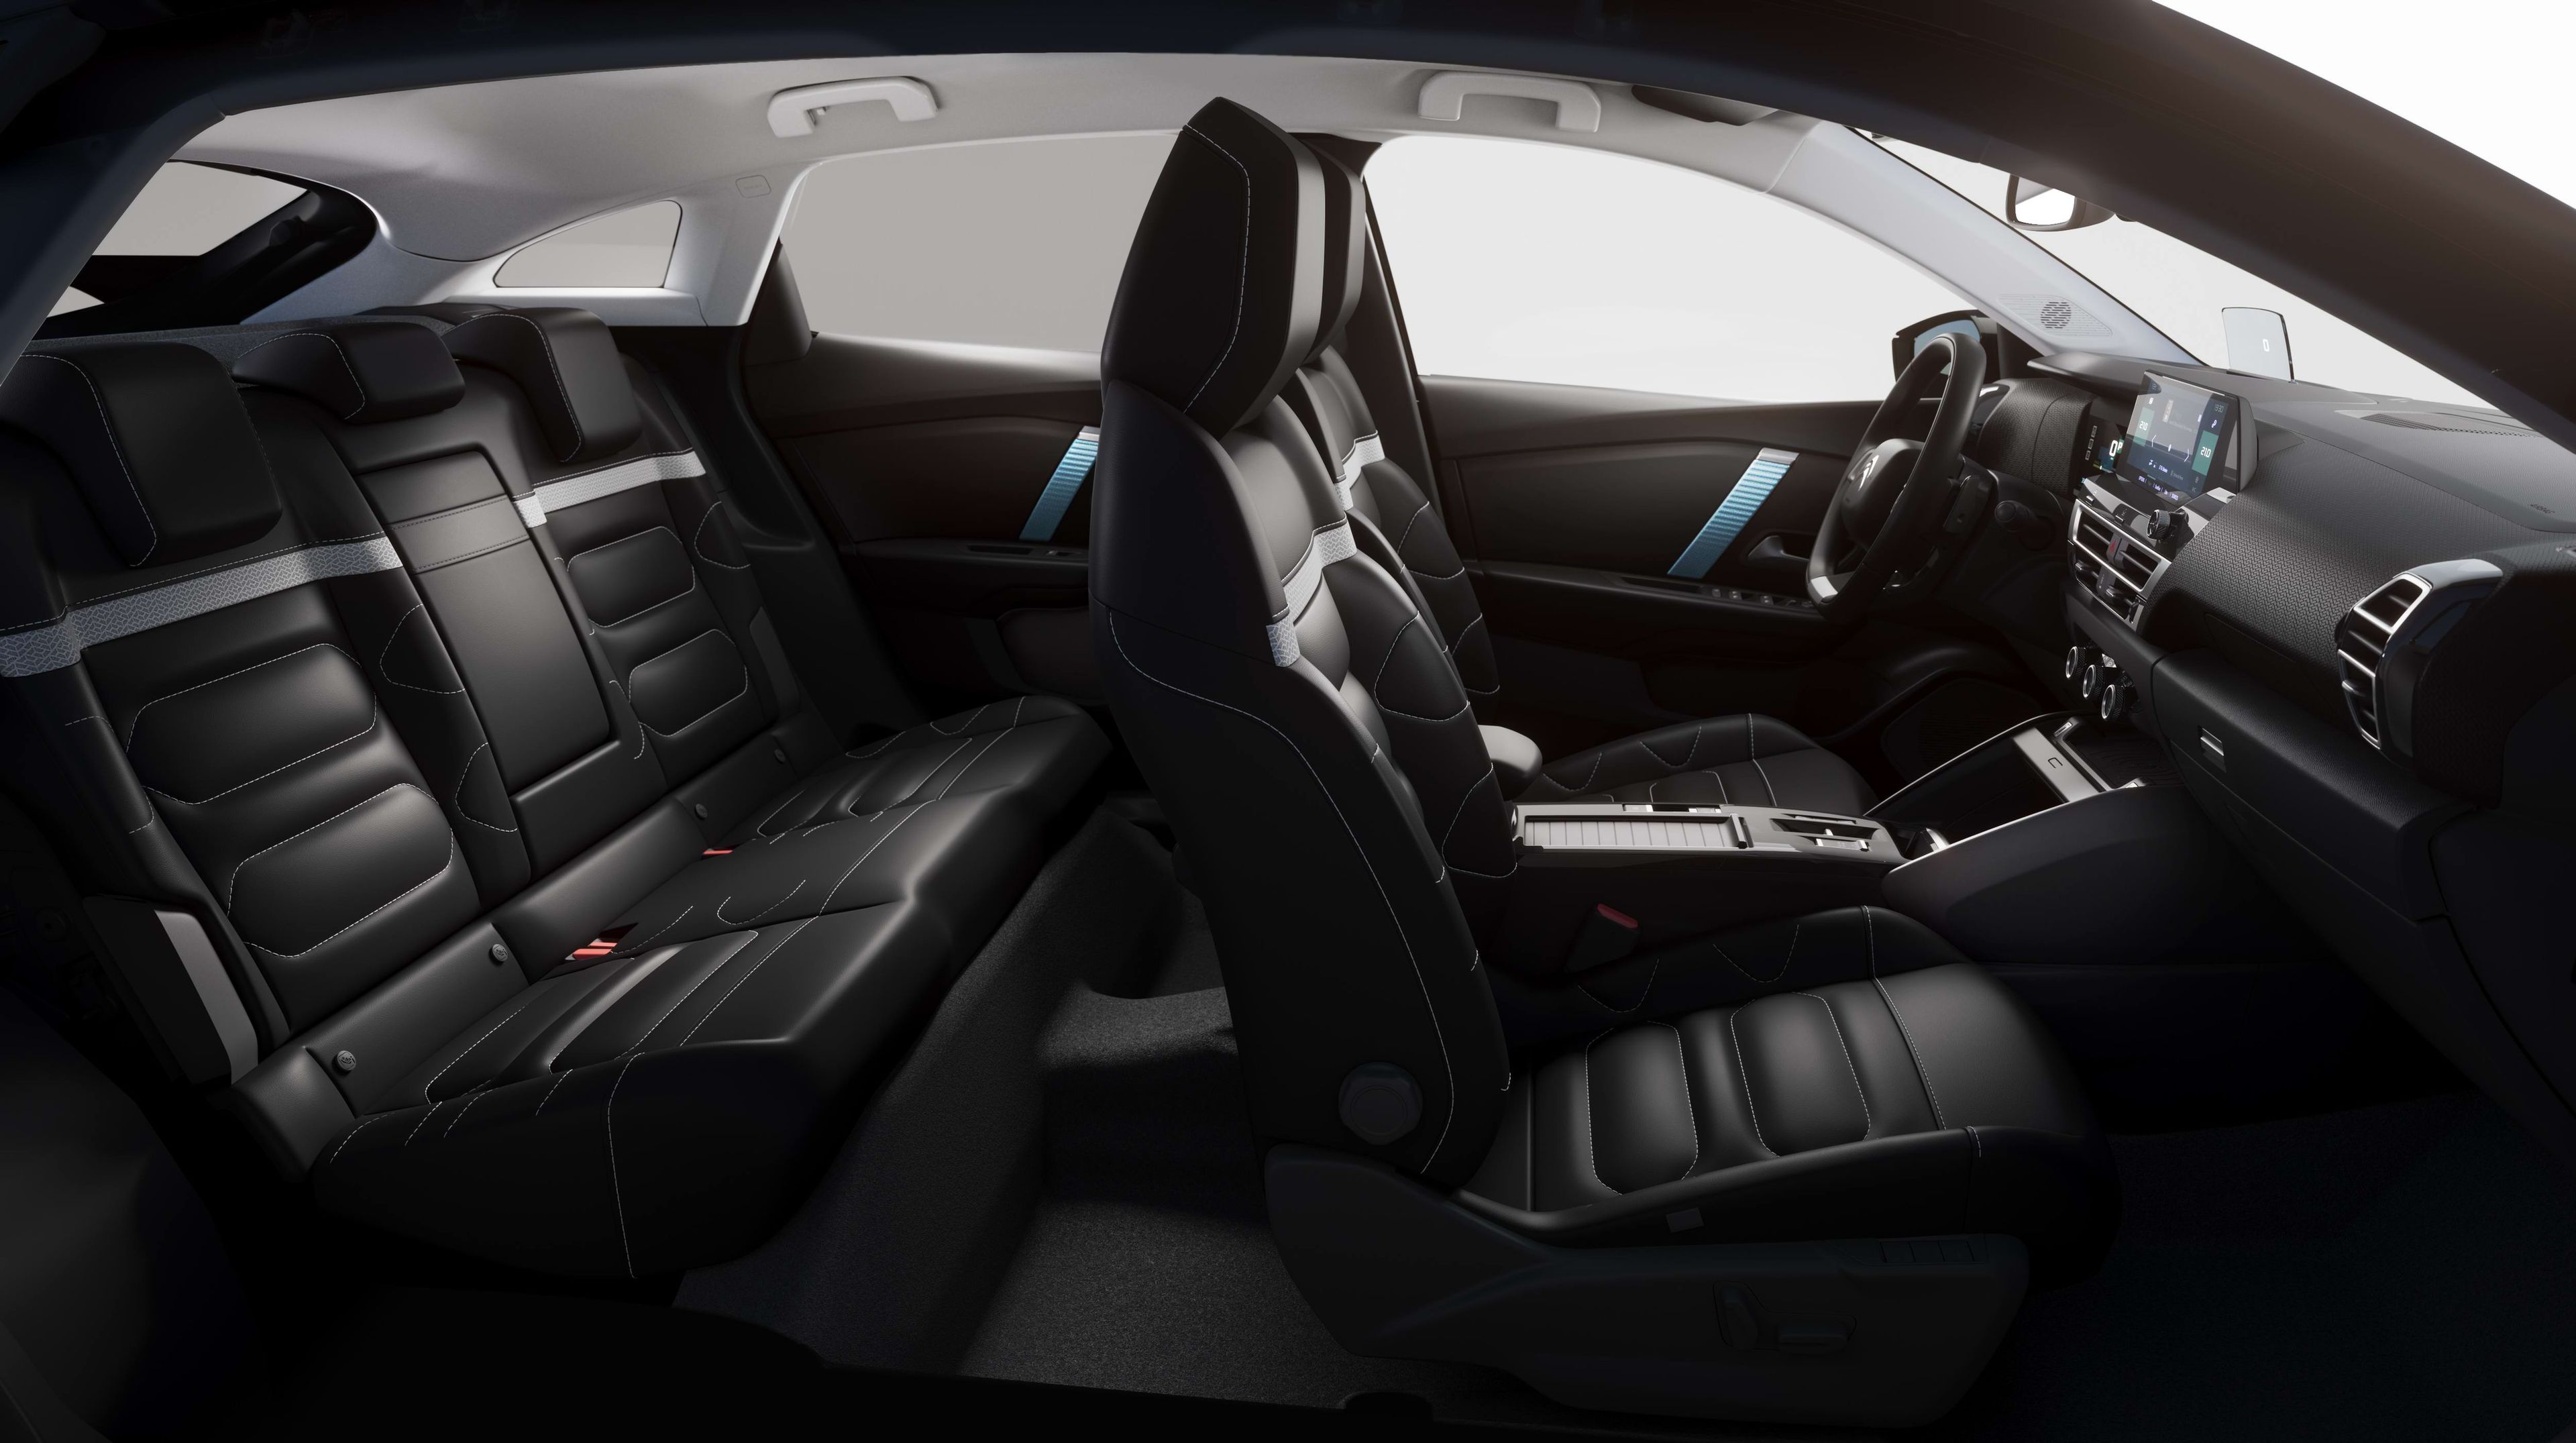 Citroën C4 interior advanced comfort